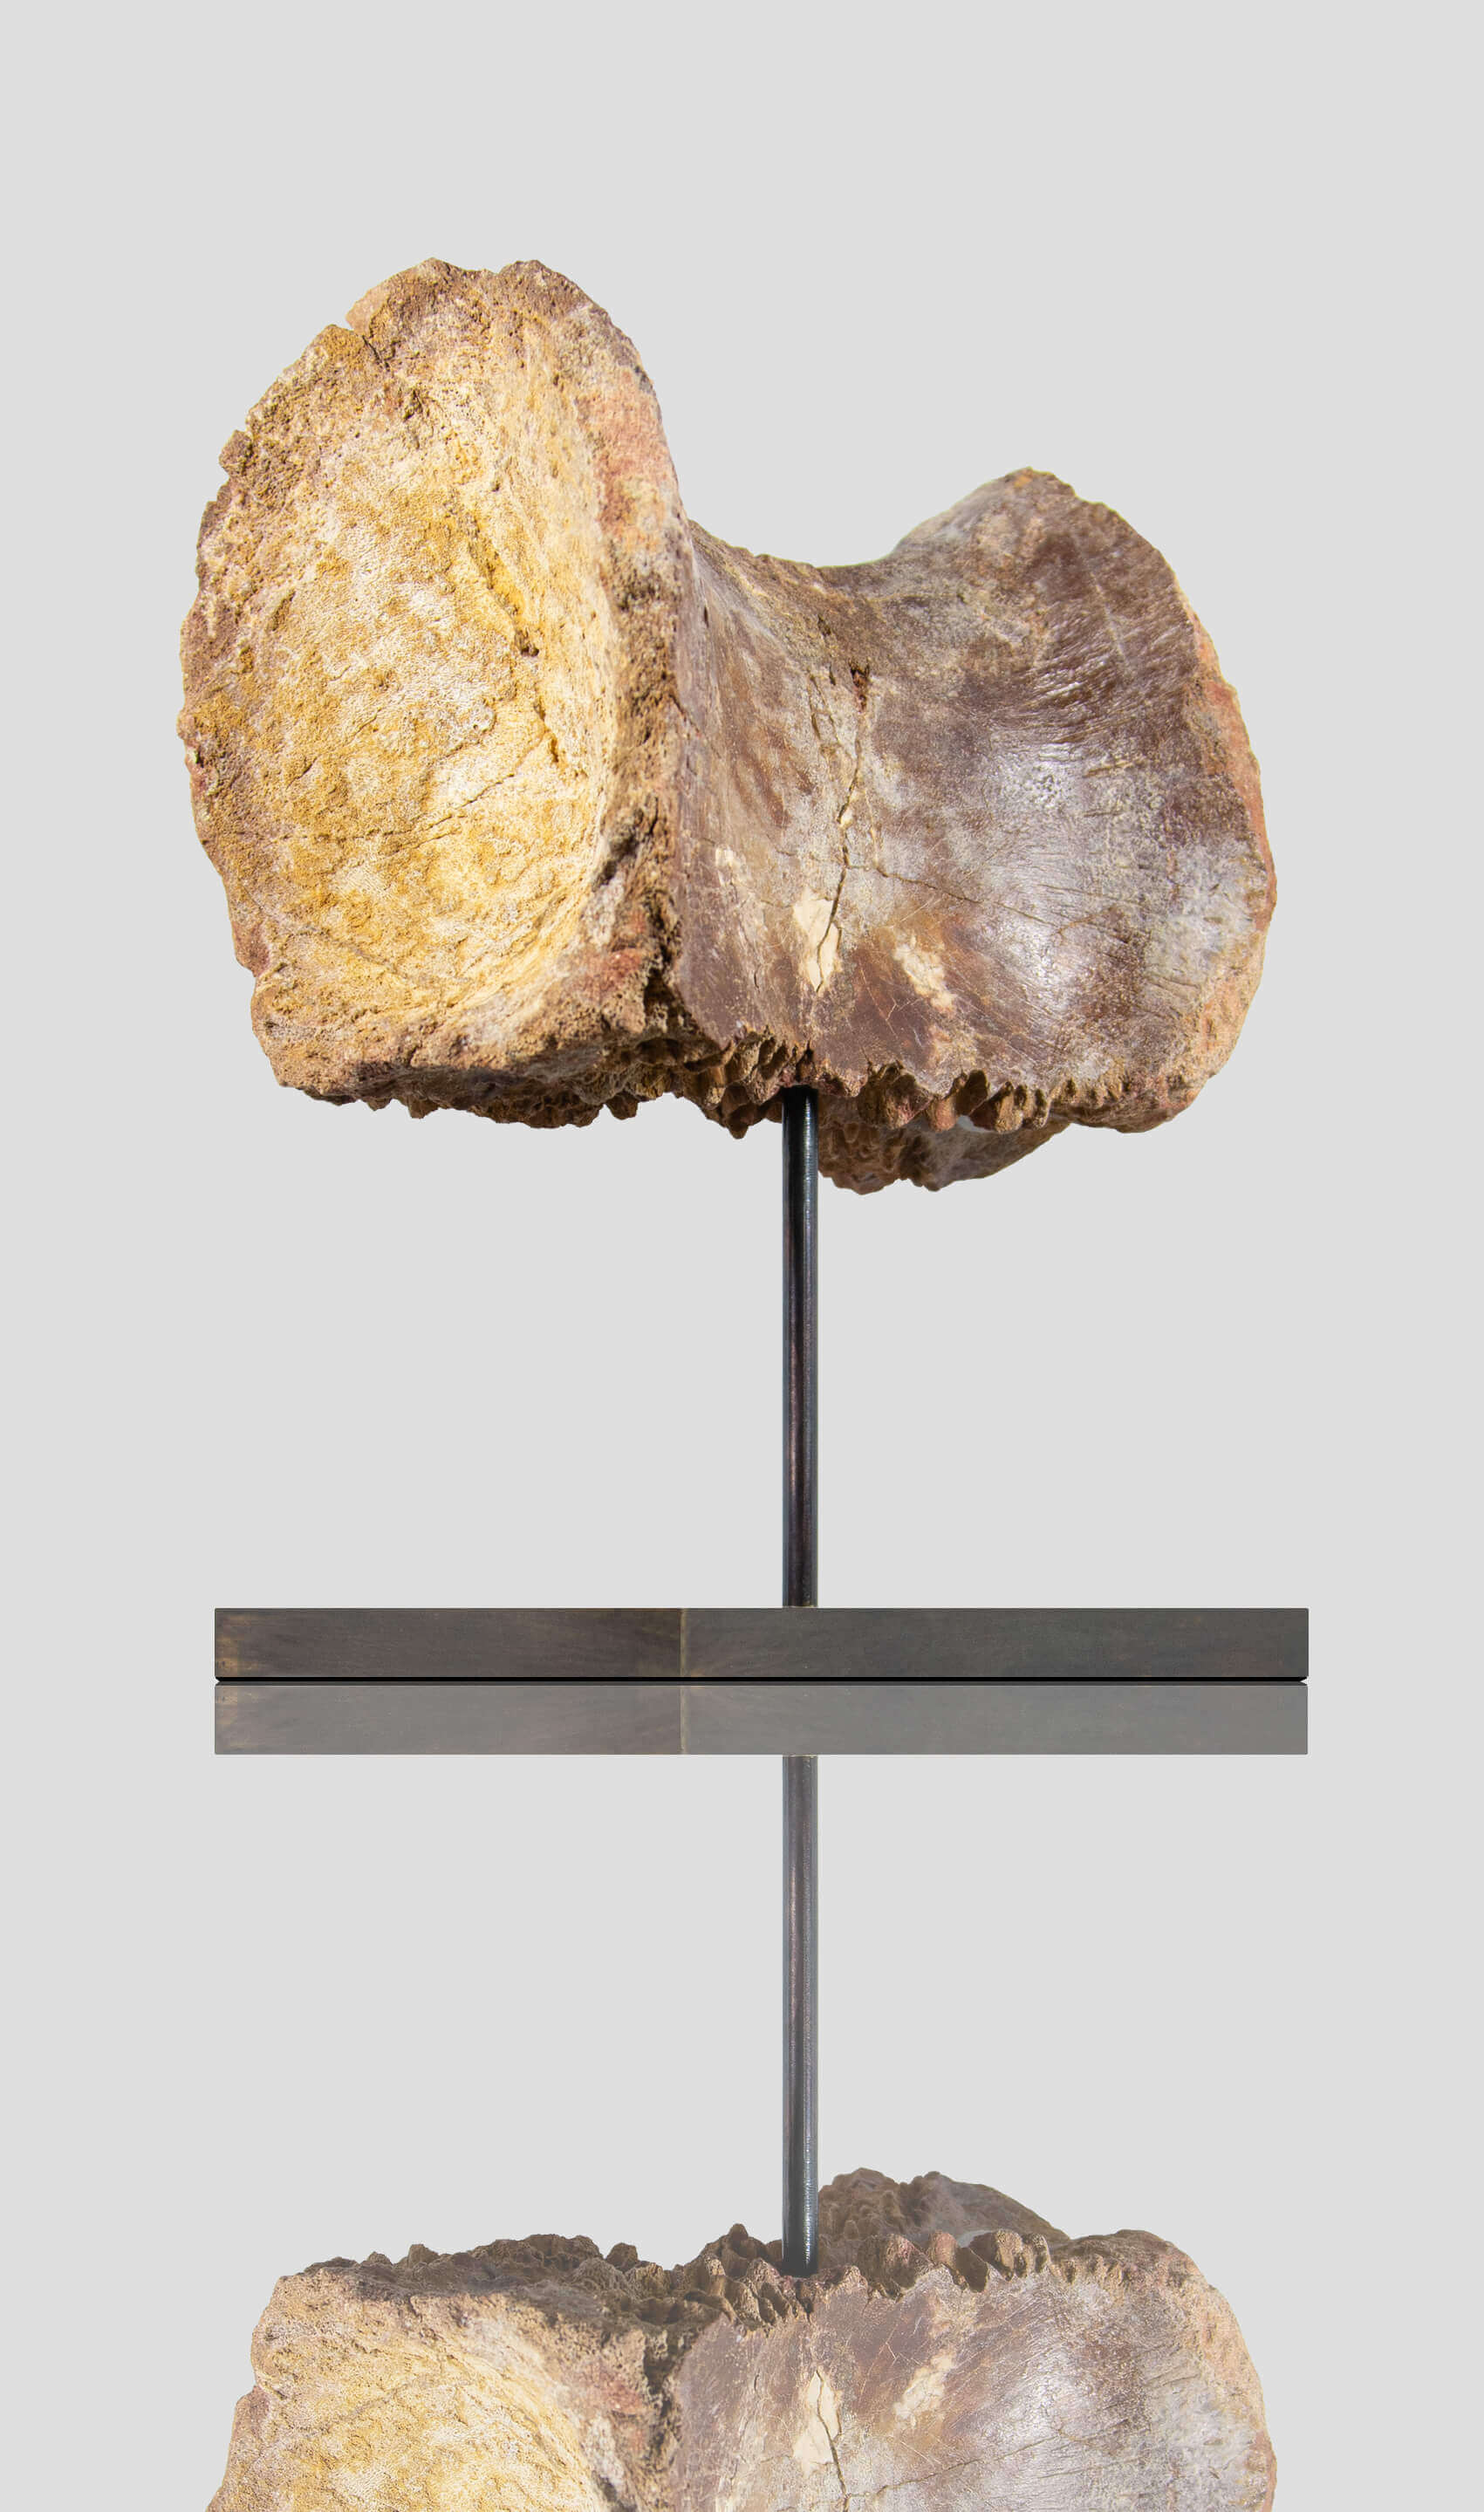 Dinosaur vertebra for sale on a bronze stand for interior display 34